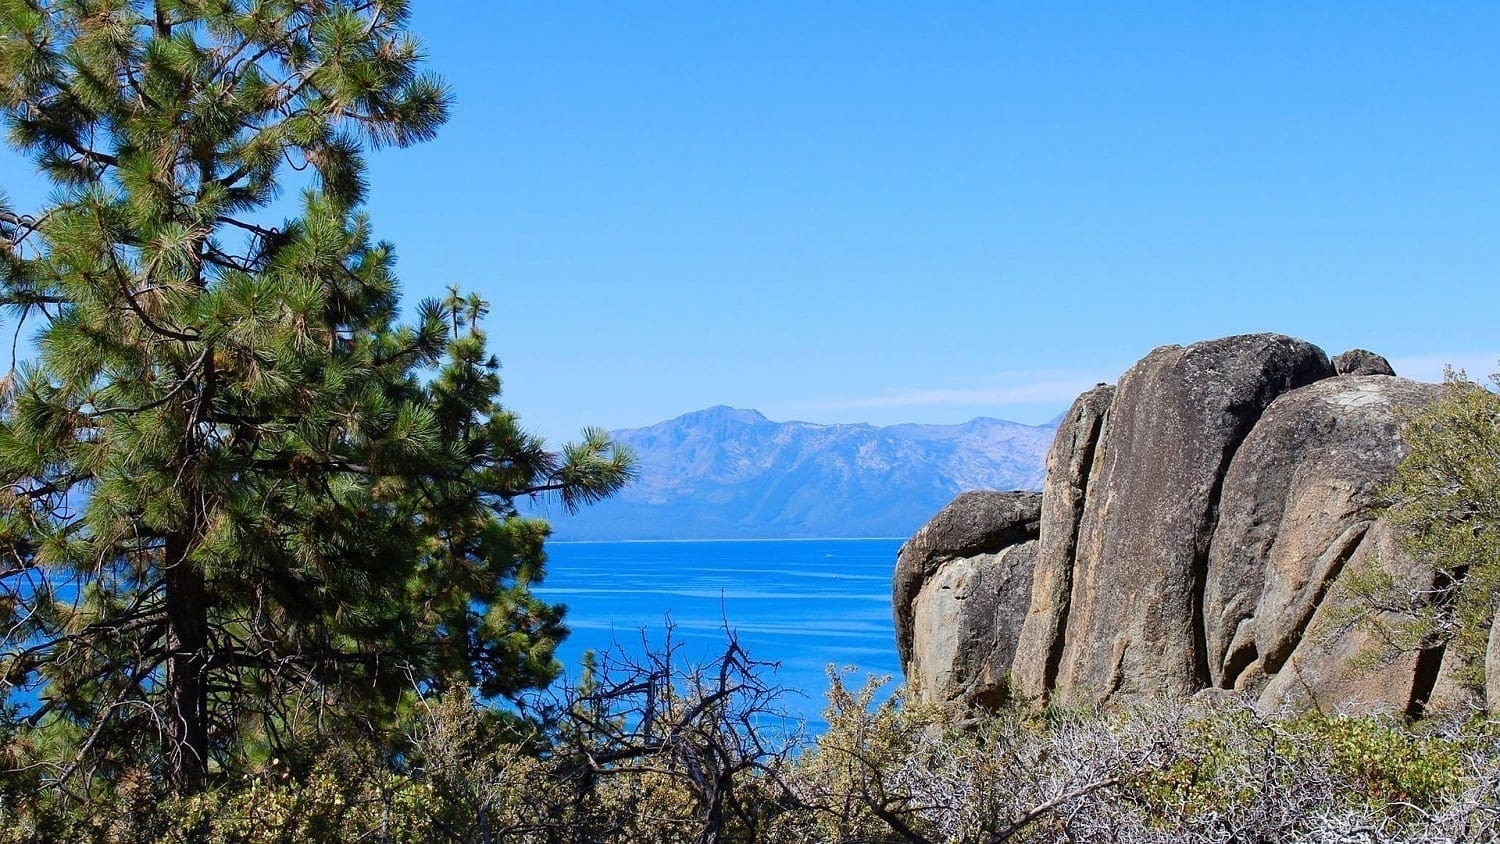 Lake Tahoe with Ponderosa Pine and rocks, photo credit: Pixabay: Tim Fagan